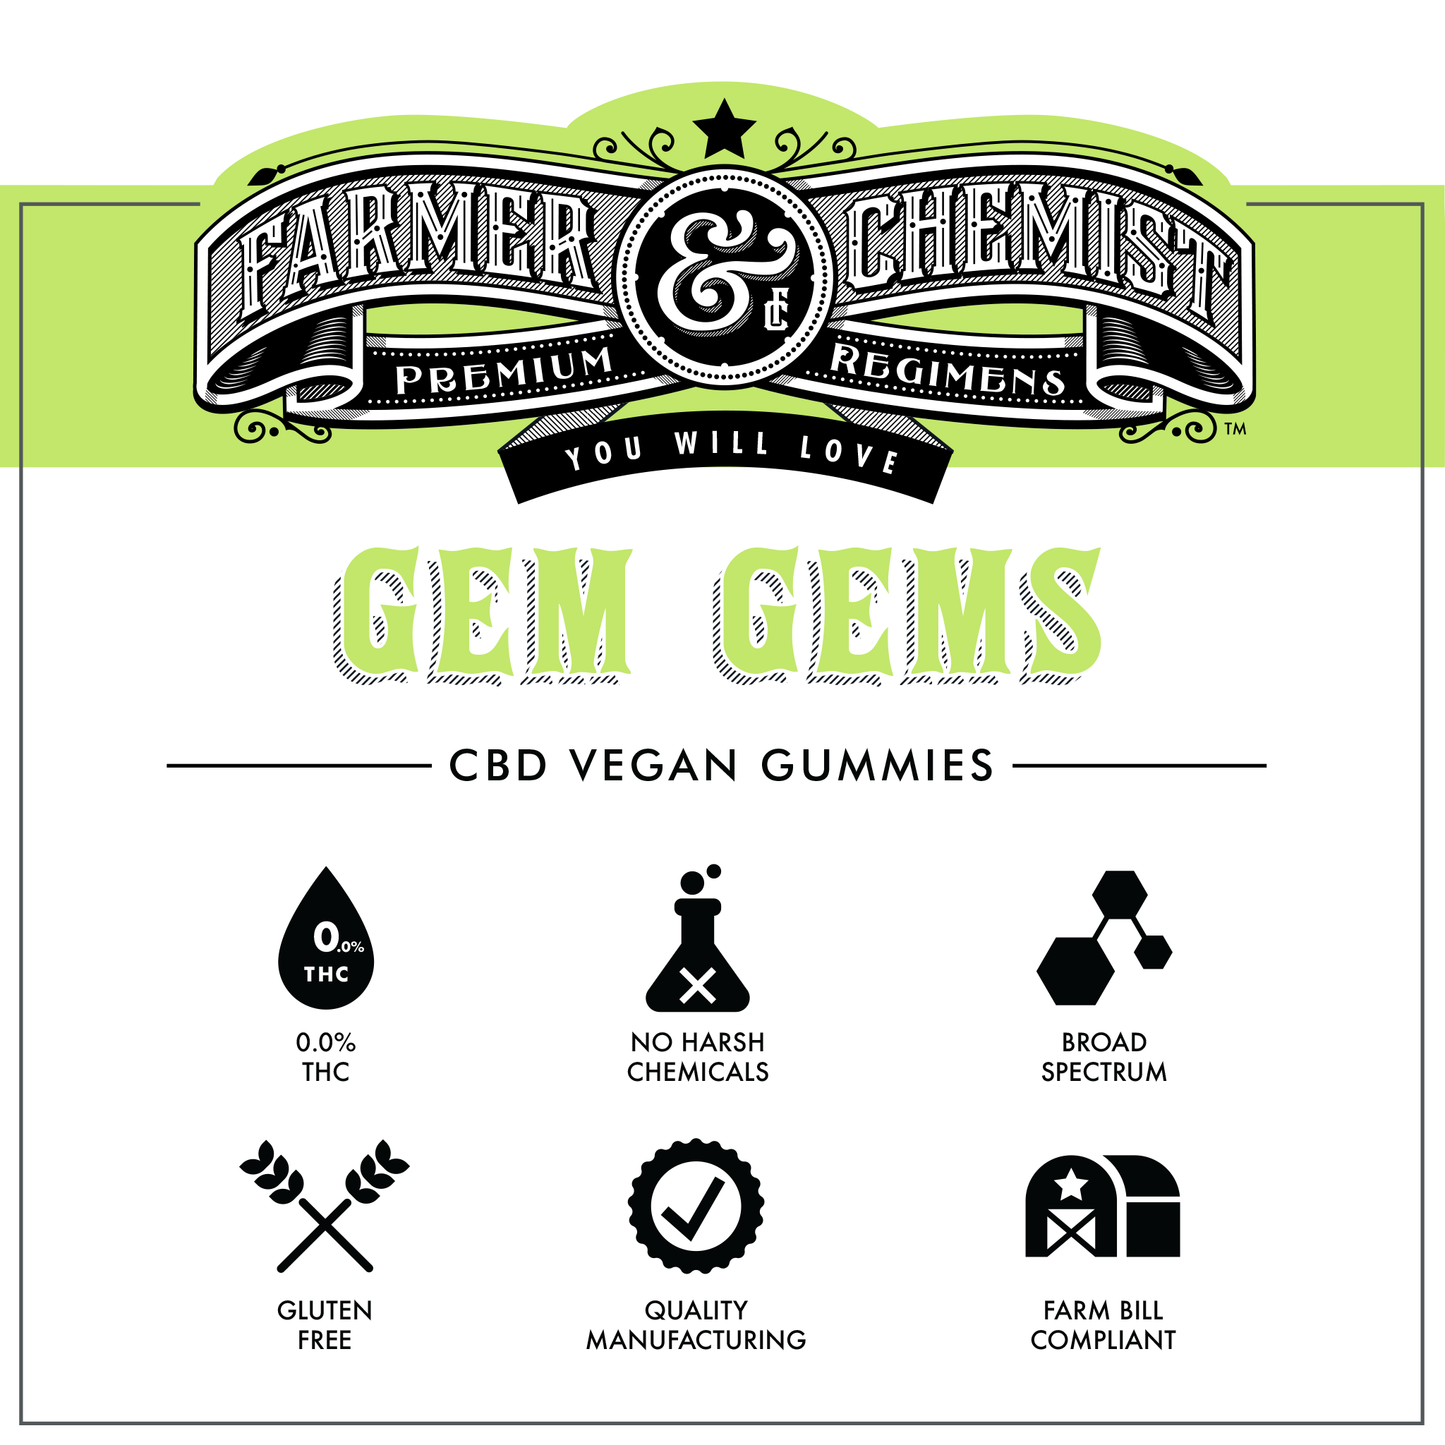 GEM GEMS - 24ct 25mg CBD/5mg CBG Wassermelonengeschmack (Karton mit 4)